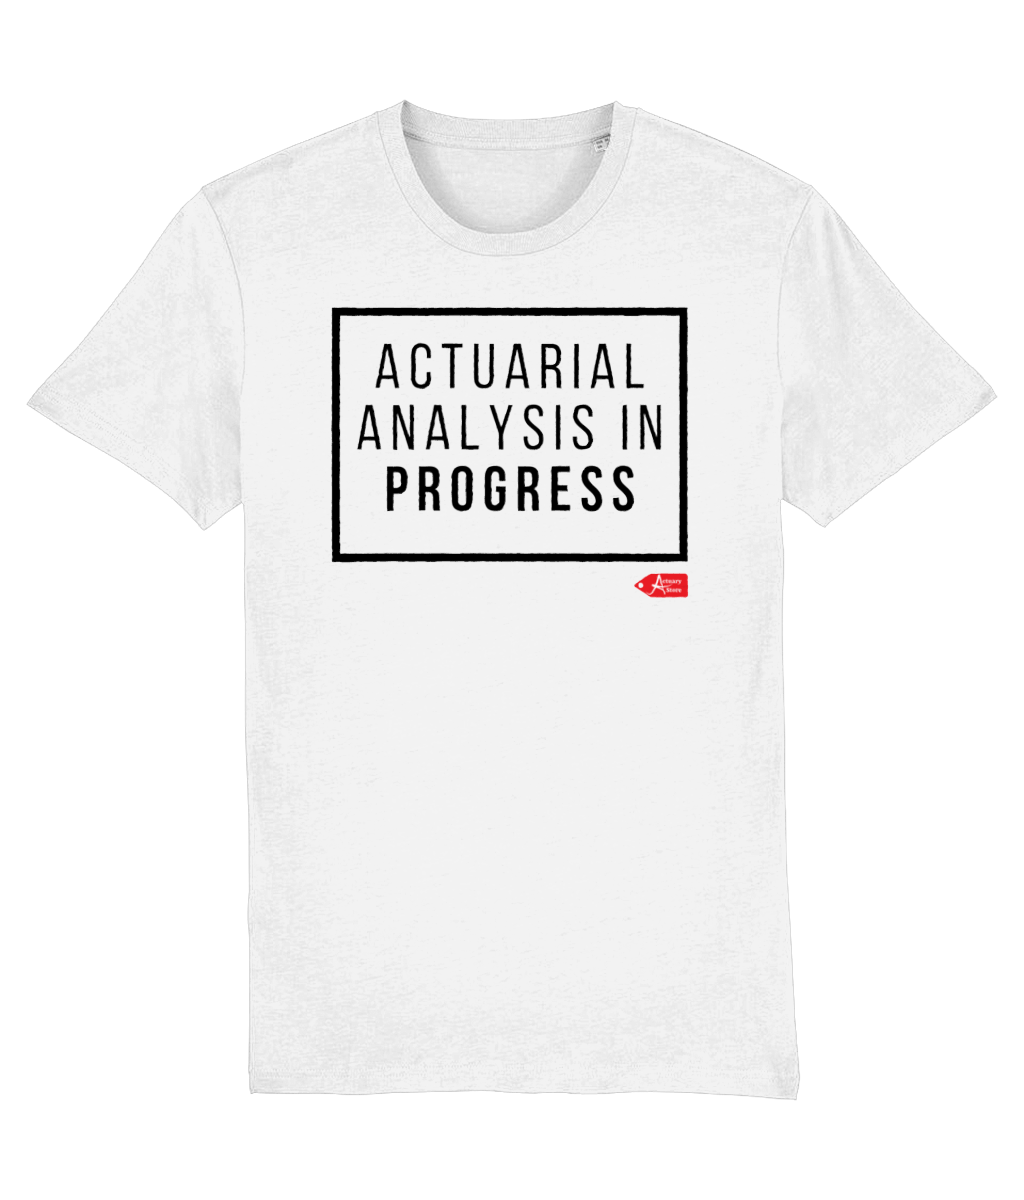 Actuarial Analysis In Progress T-Shirt